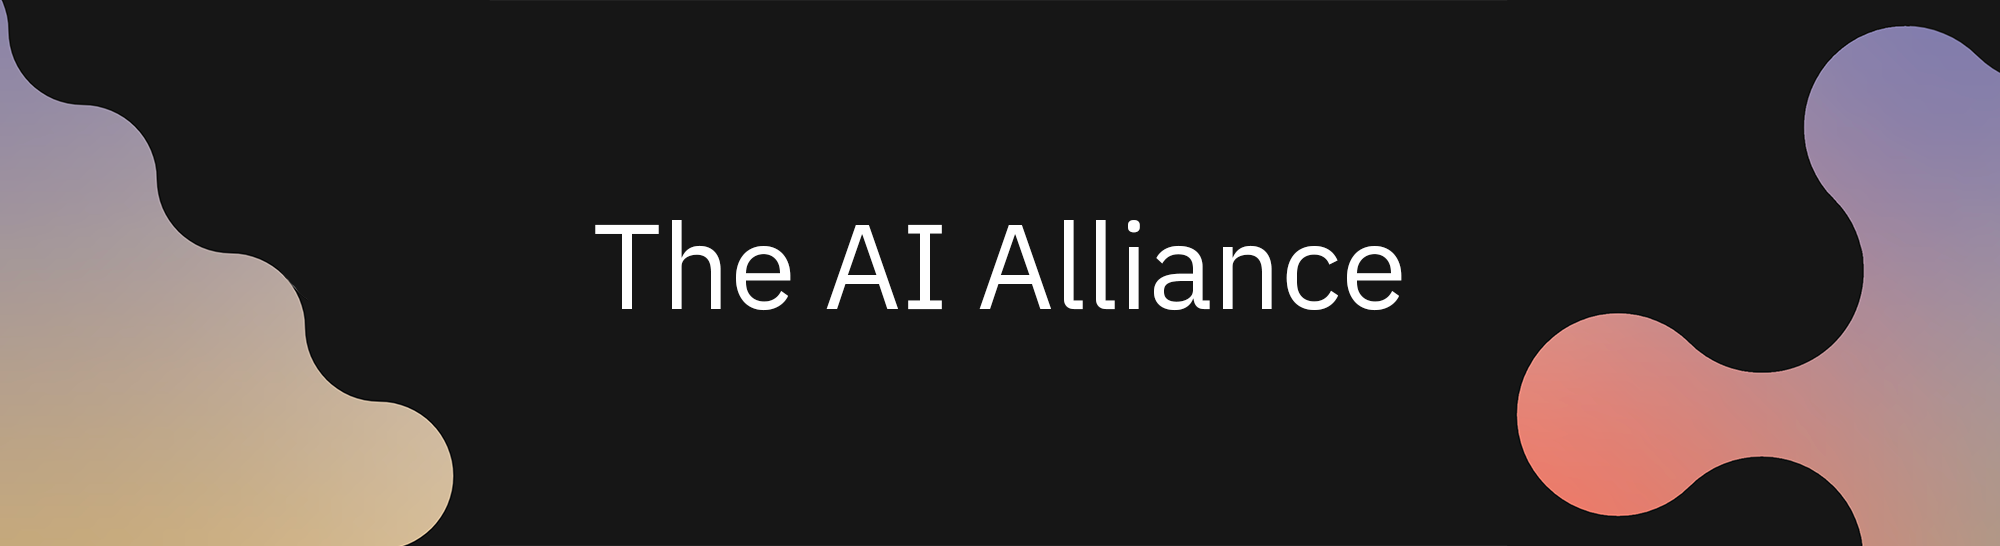 AI Alliance Banner